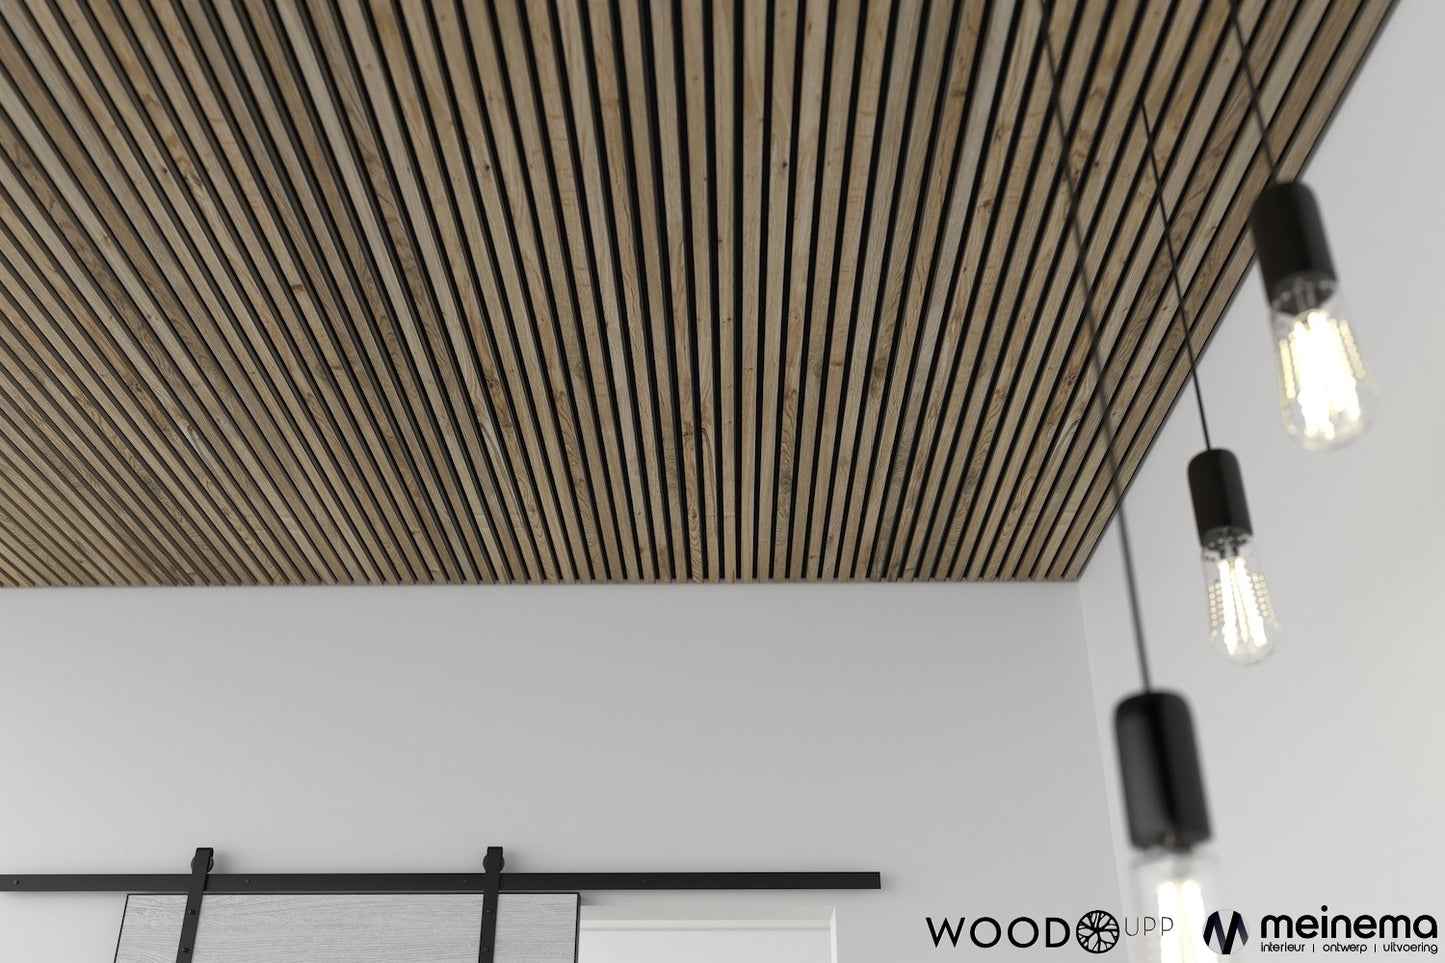 Woodupp akoestische plafondpanelen